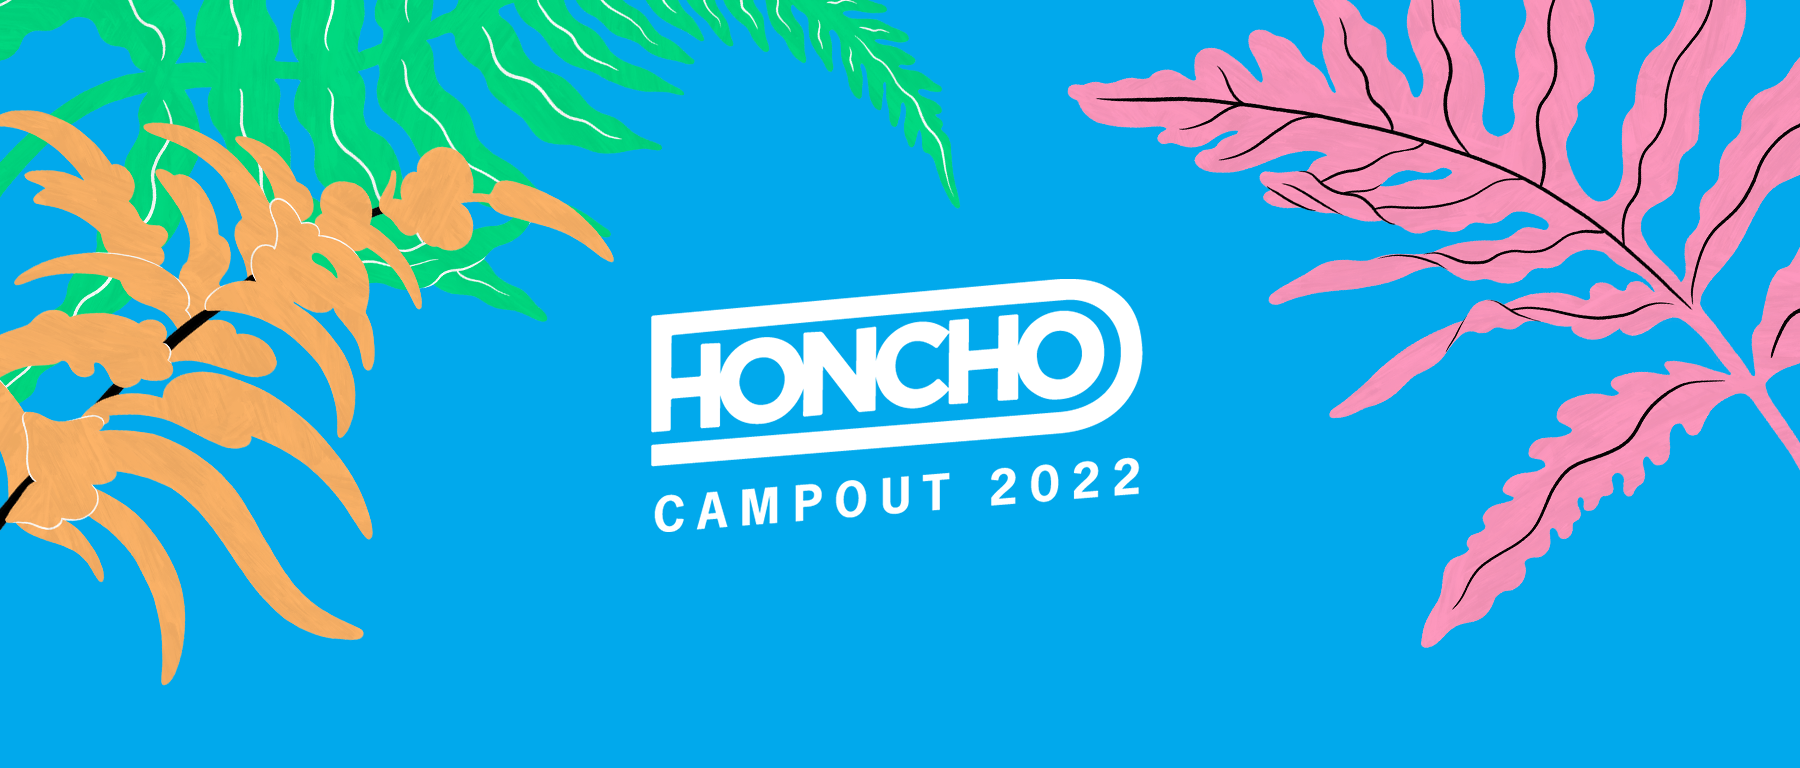 Honcho Campout 2022 - Página frontal